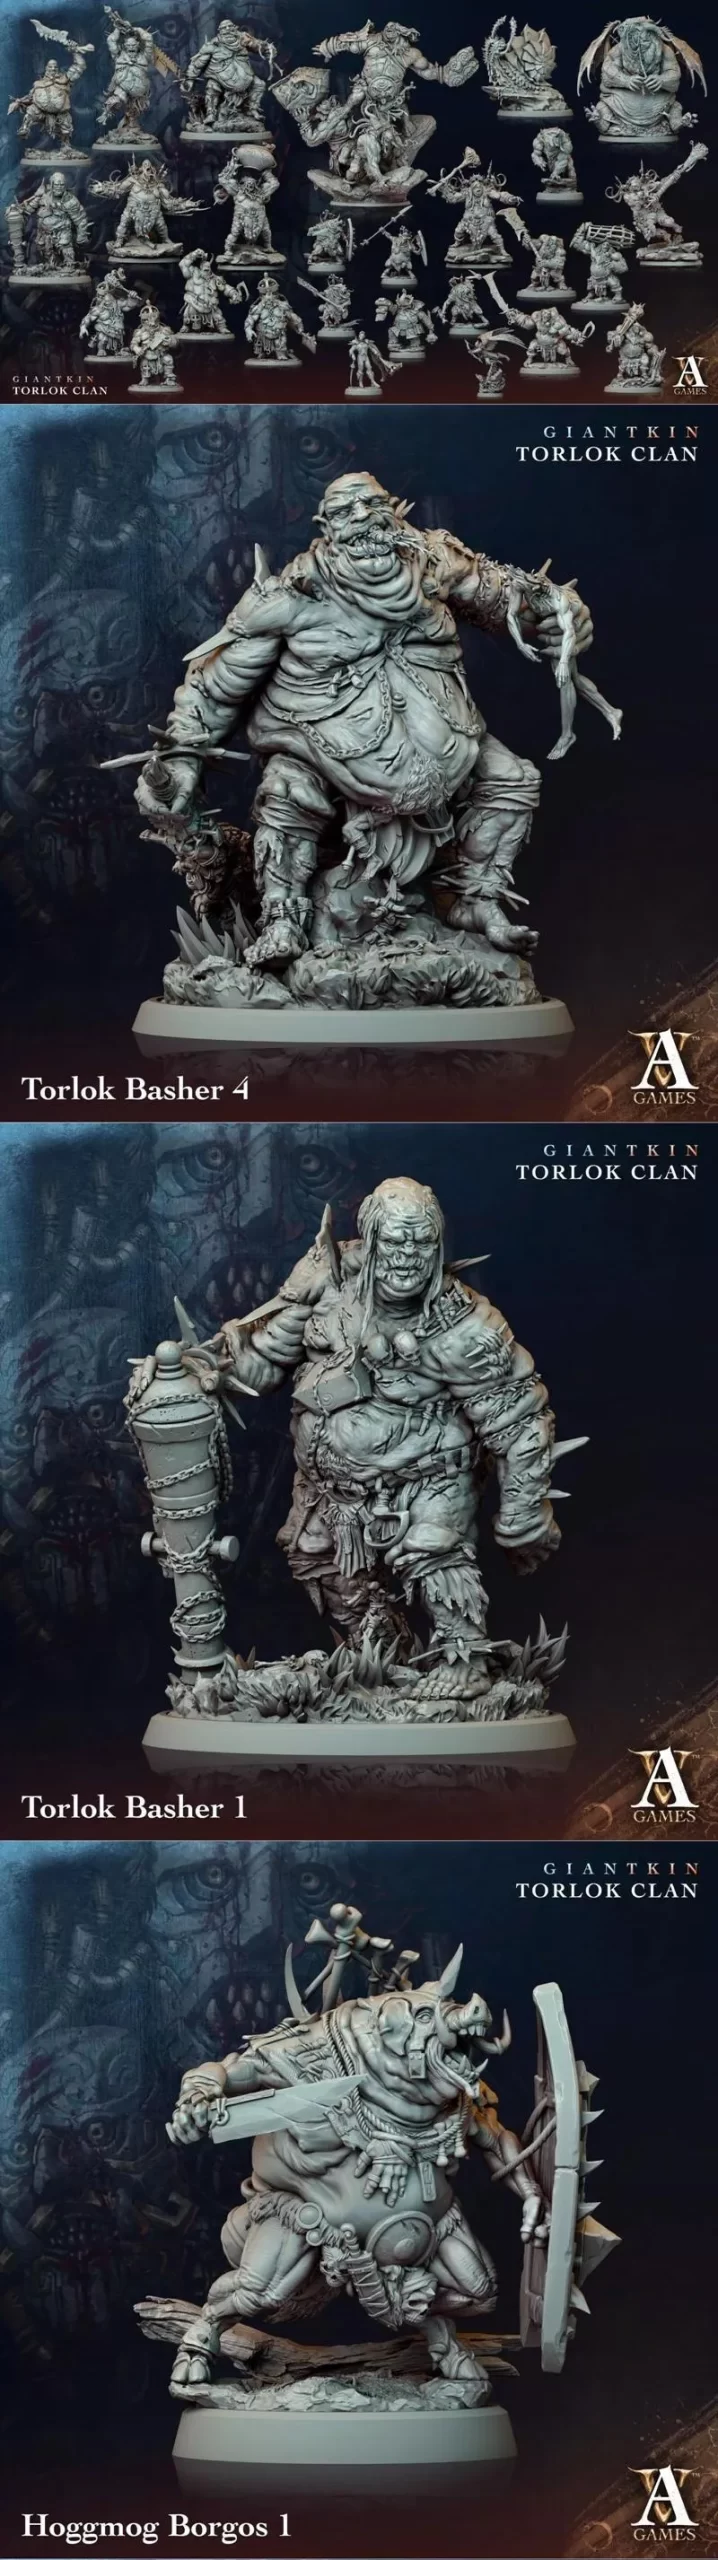 Giantkin - Torlok Clan